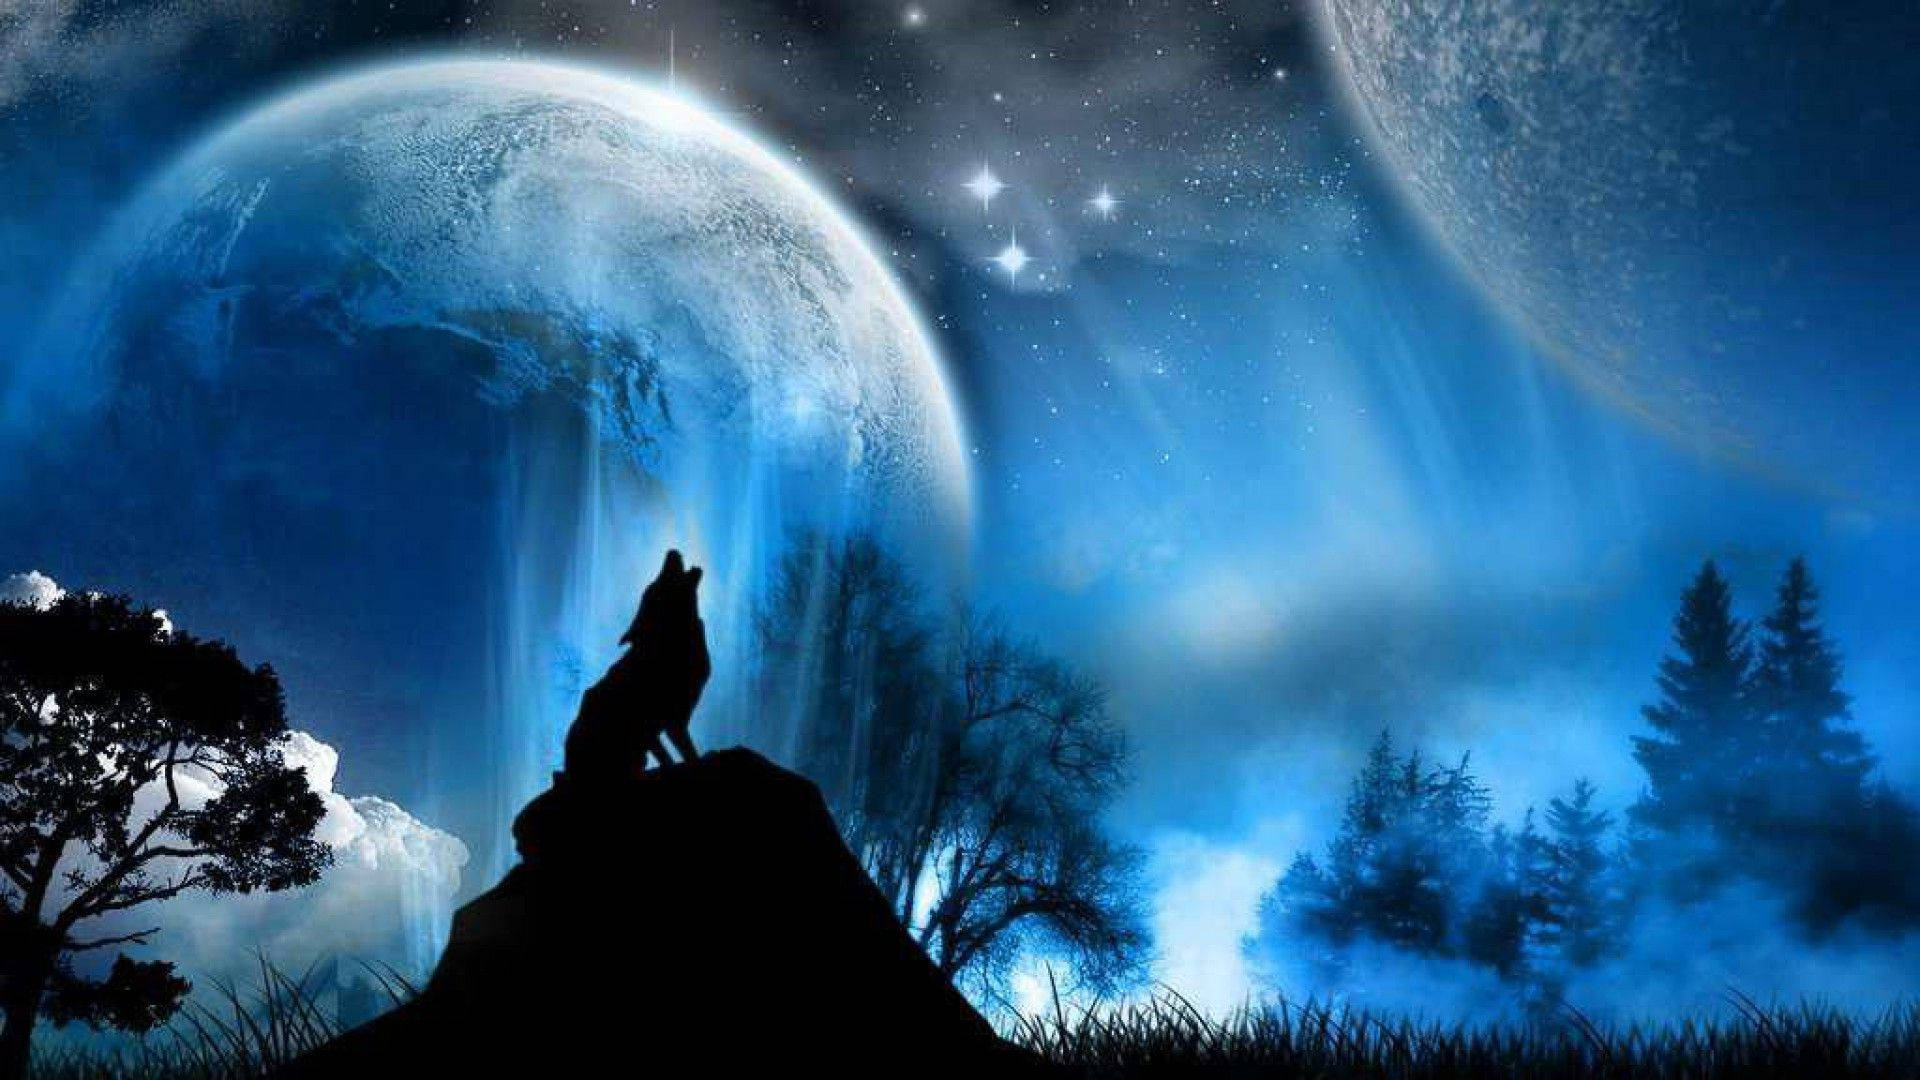 Howling Wolf Digital Art